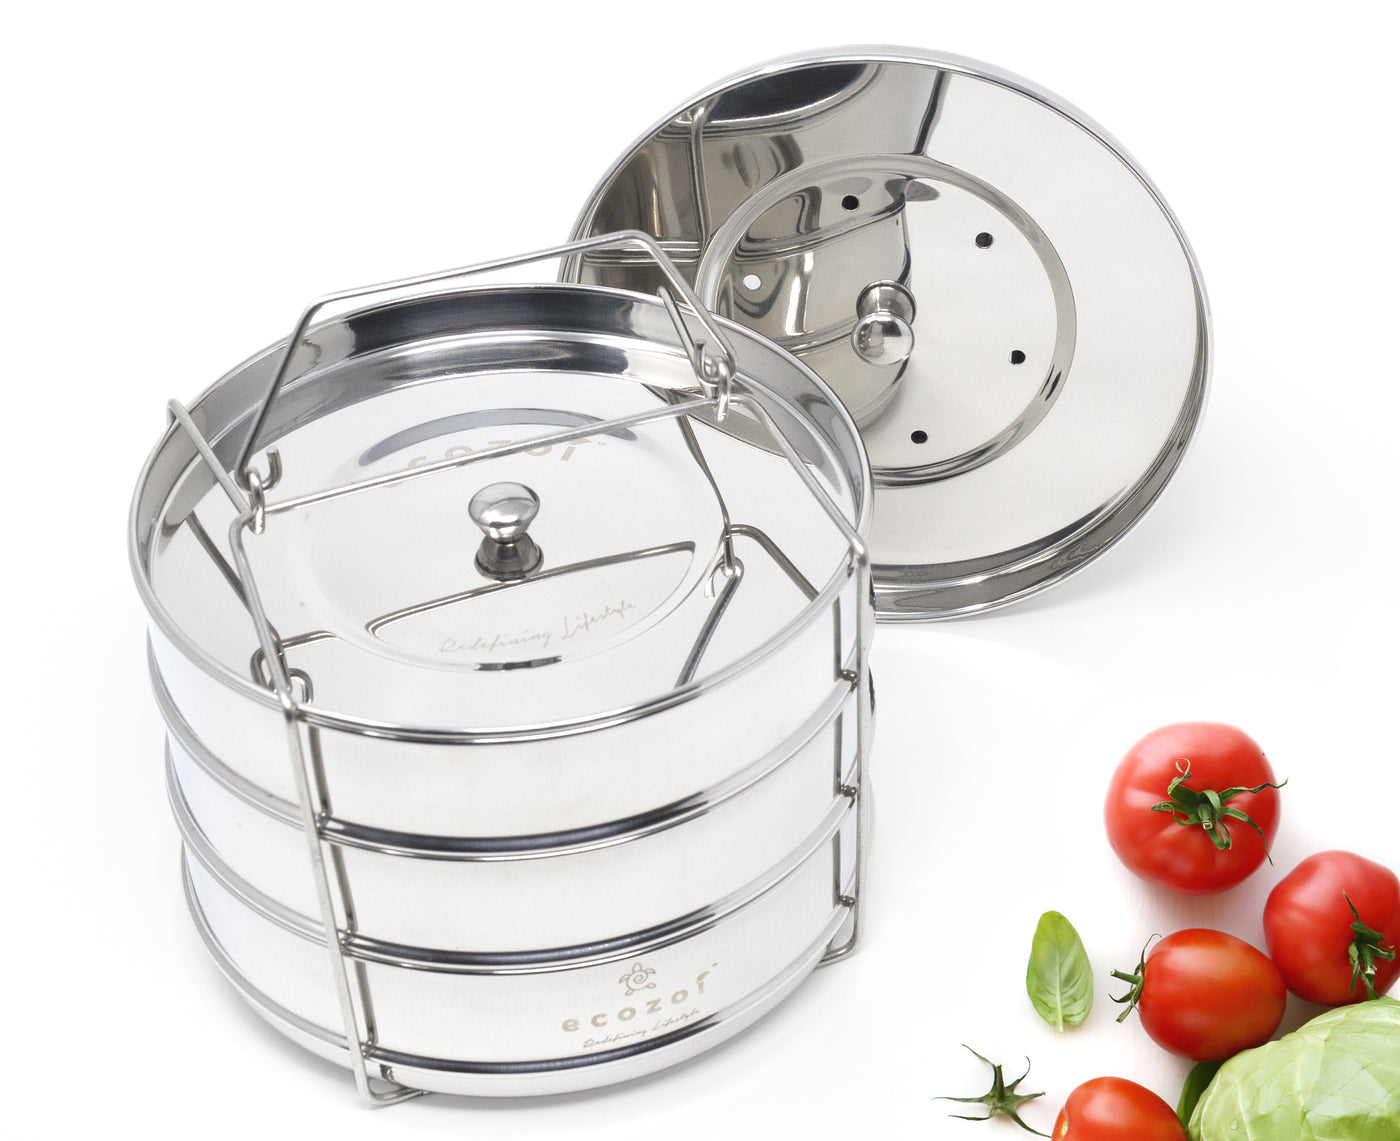 Instant Pot Insert Pans, Pot-in-Pot Pans for 6 Qt / 8 Qt Pressure Cookers, 3 Tier freeshipping - ecozoi